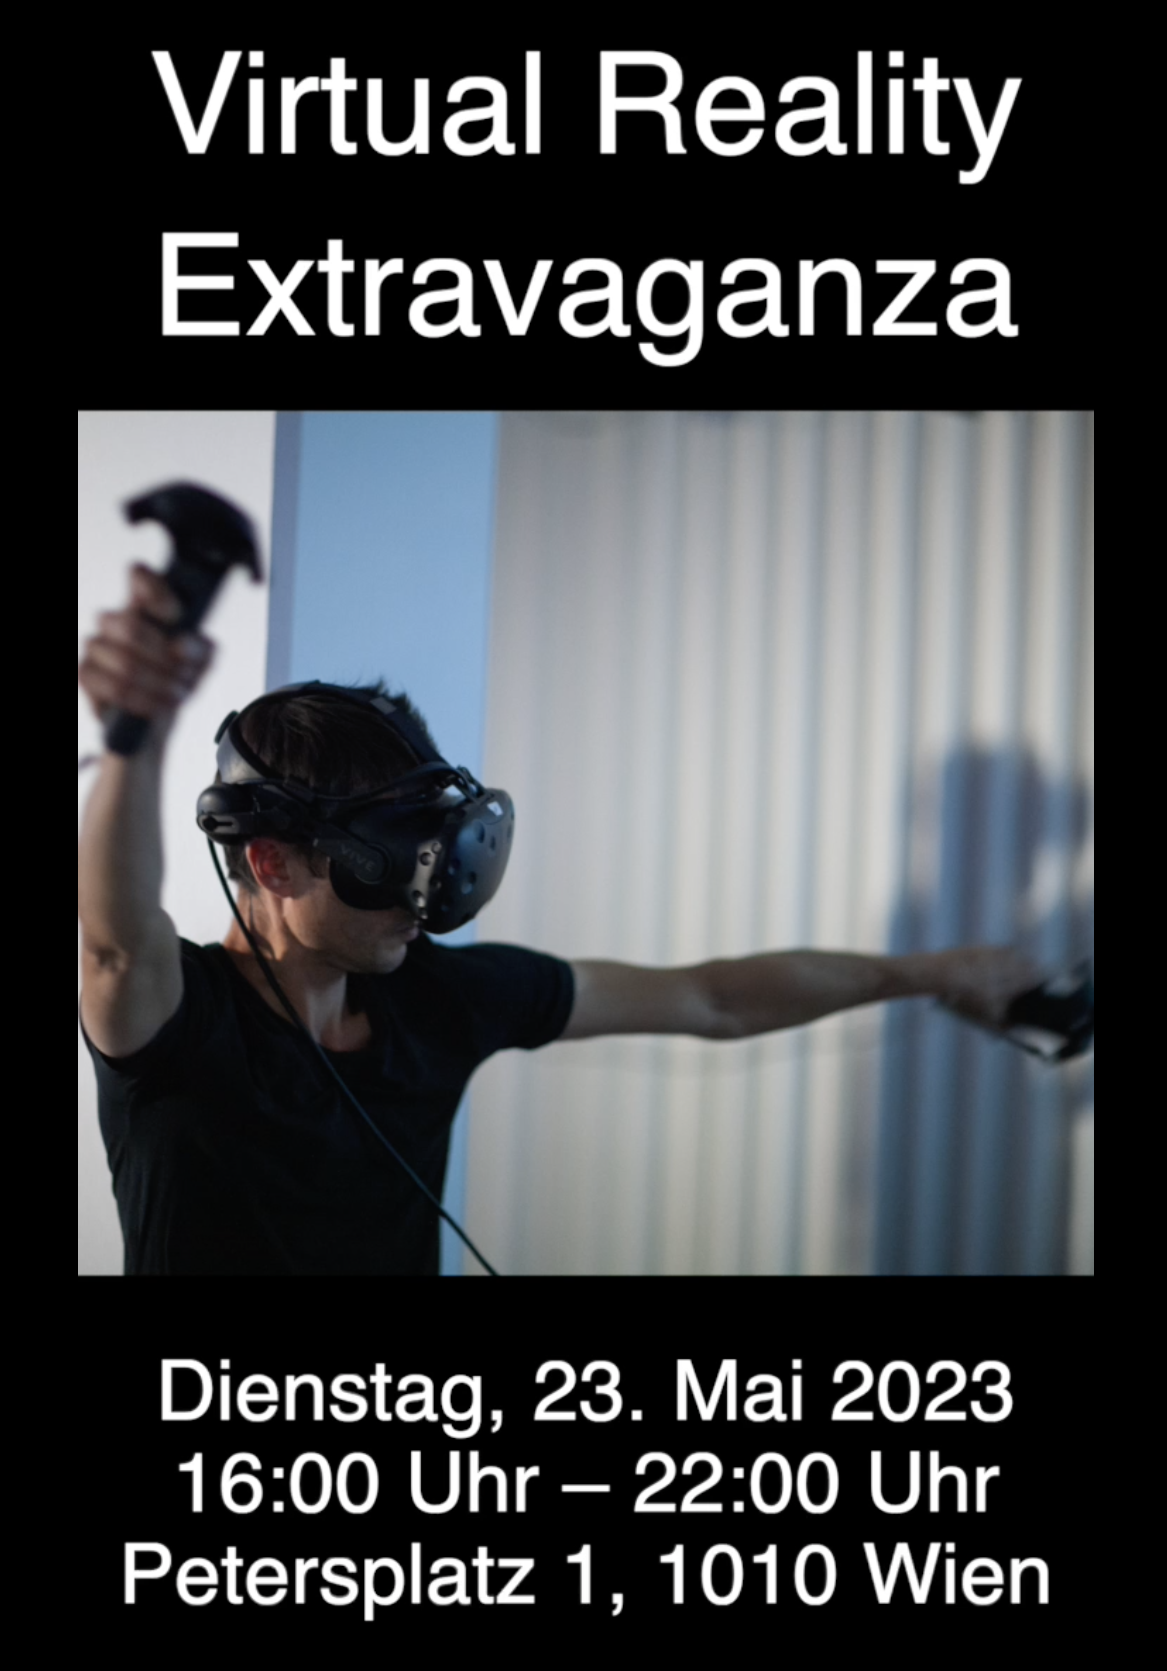 Virtual Reality Extravaganza am 23. May 2023 @ petersplatz.eins.